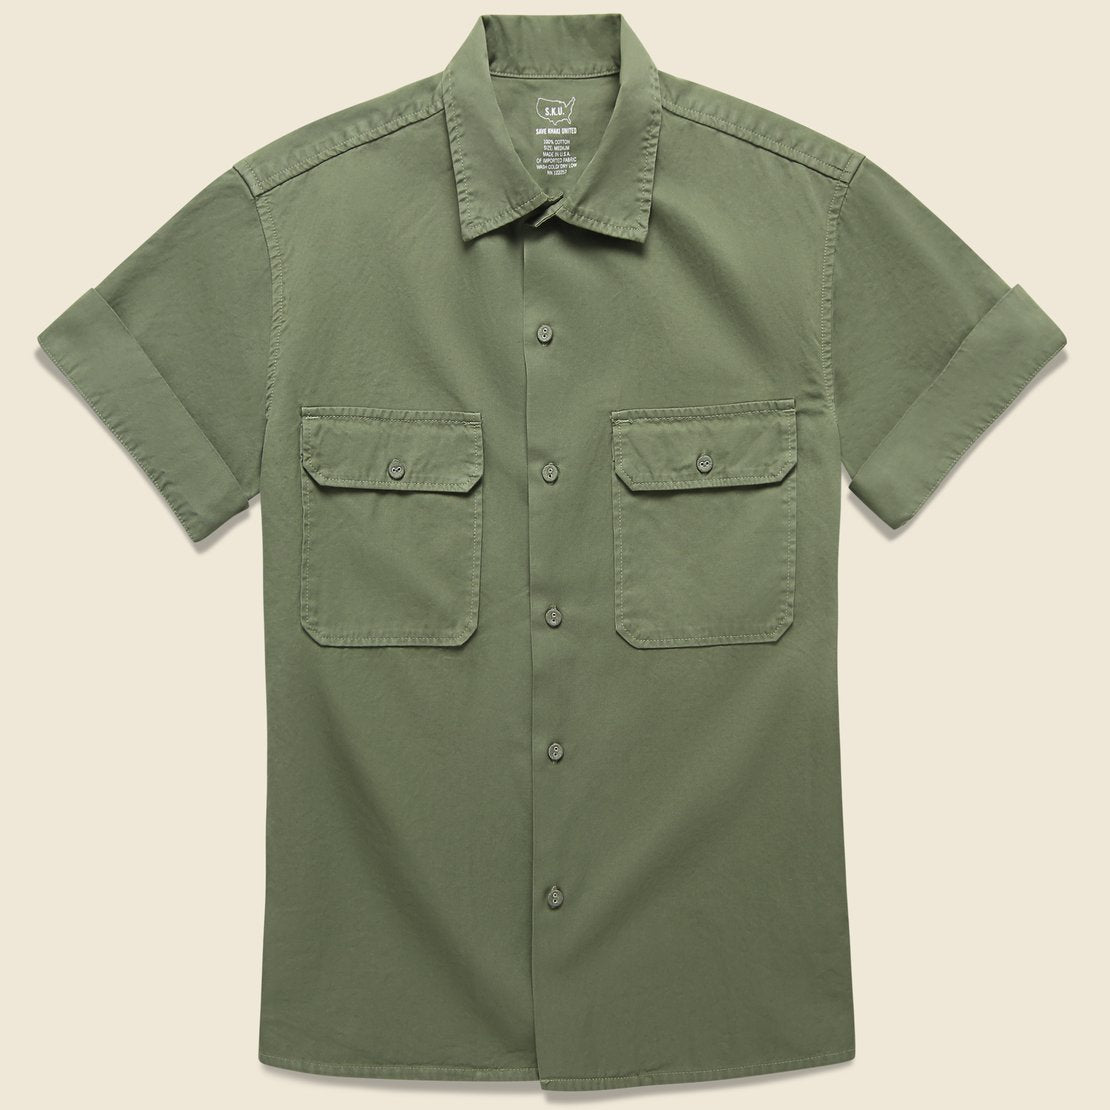 Save Khaki Light Twill Camp Shirt - Olive Drab